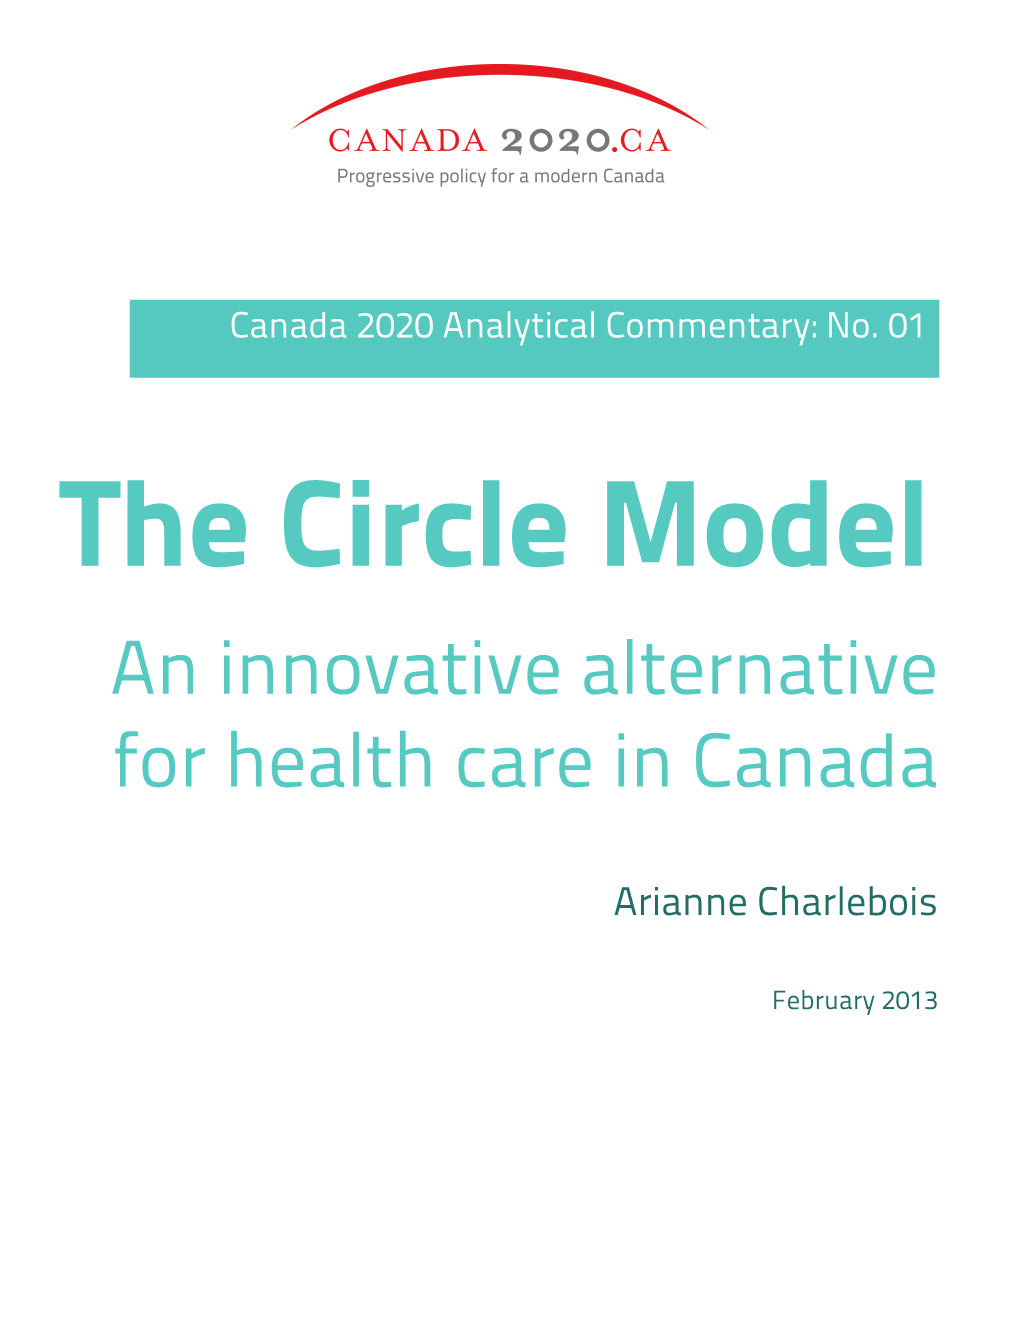 An Innovative Alternative for Health Care in Canada